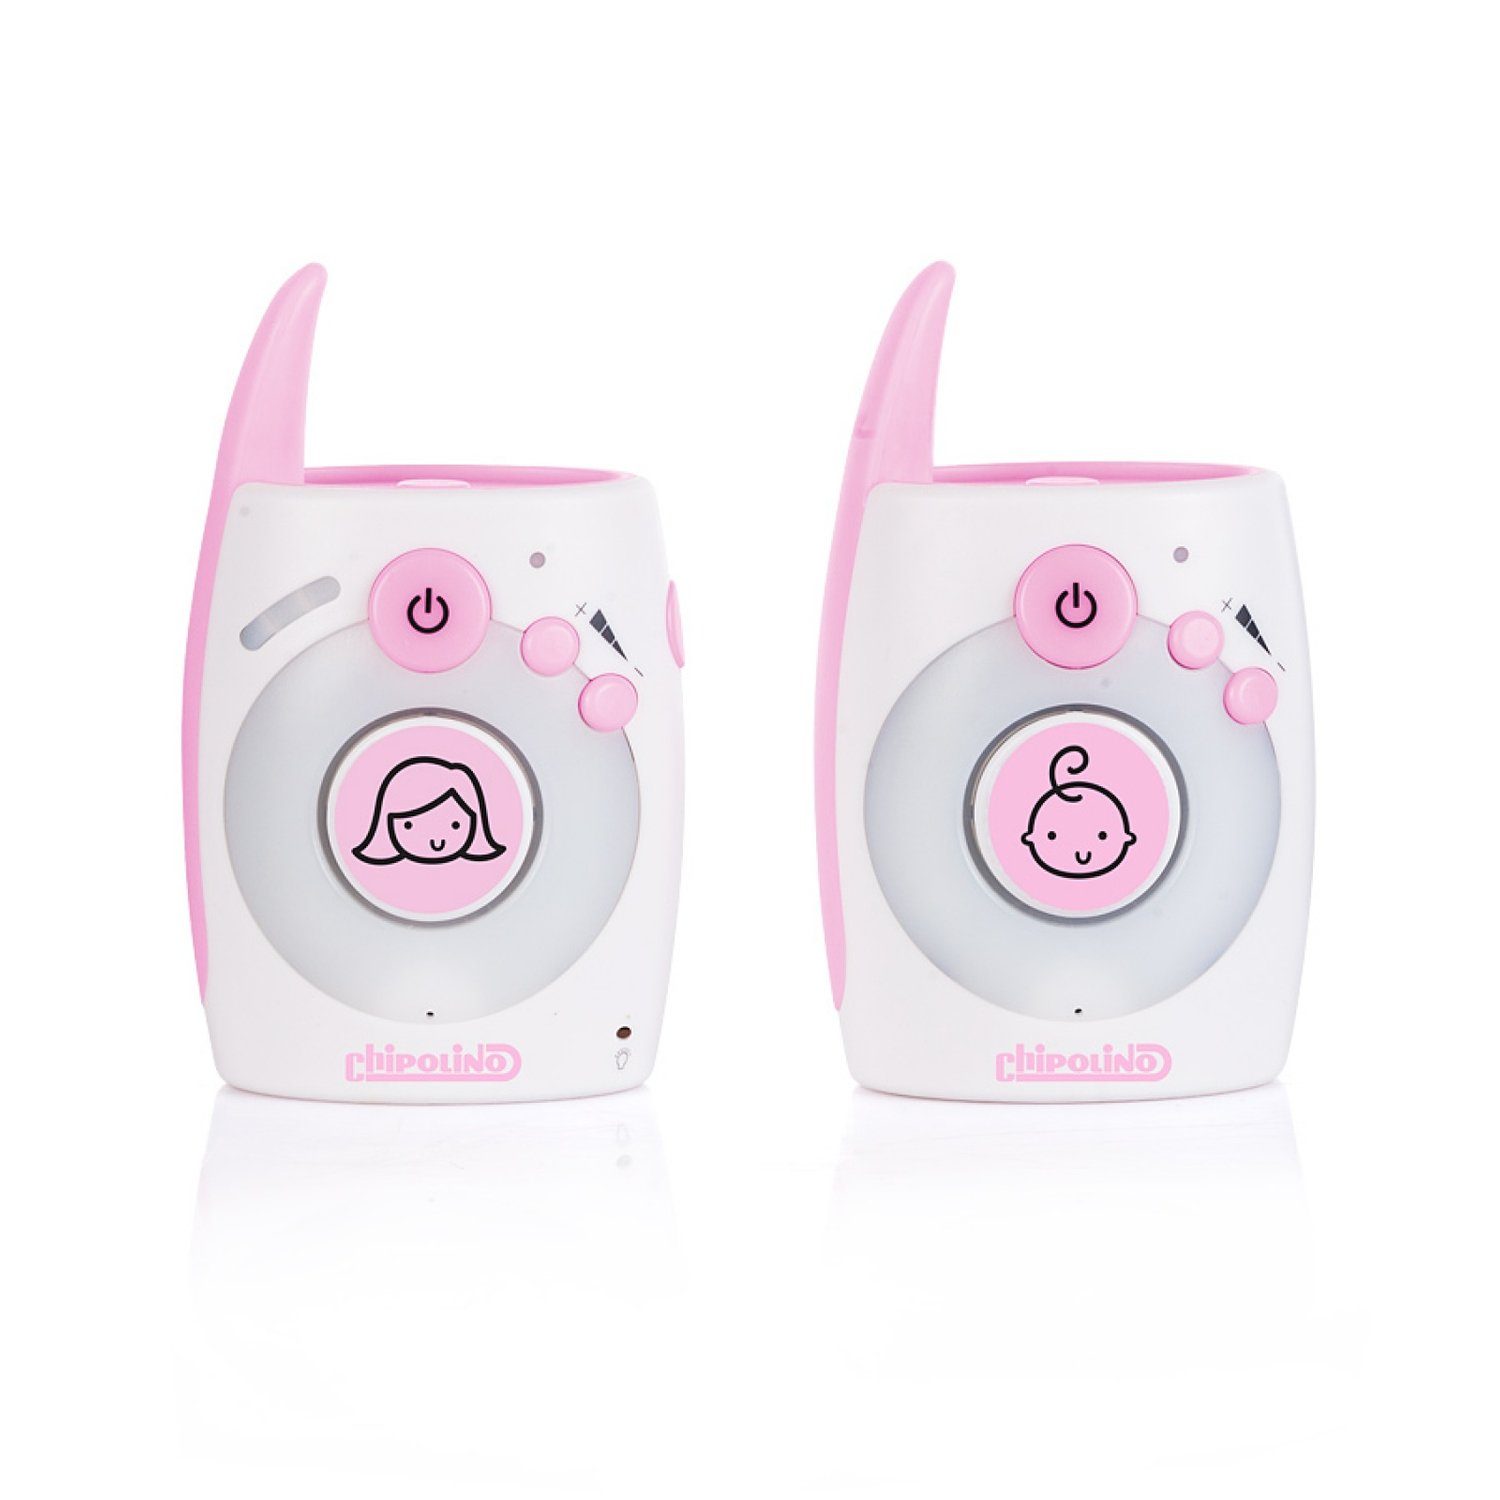 Zweiwege-Kommunikation, 300 Astro m Chipolino USB Adapter USB-Adapter, Babyphone rosa Reichweite, Babyphone